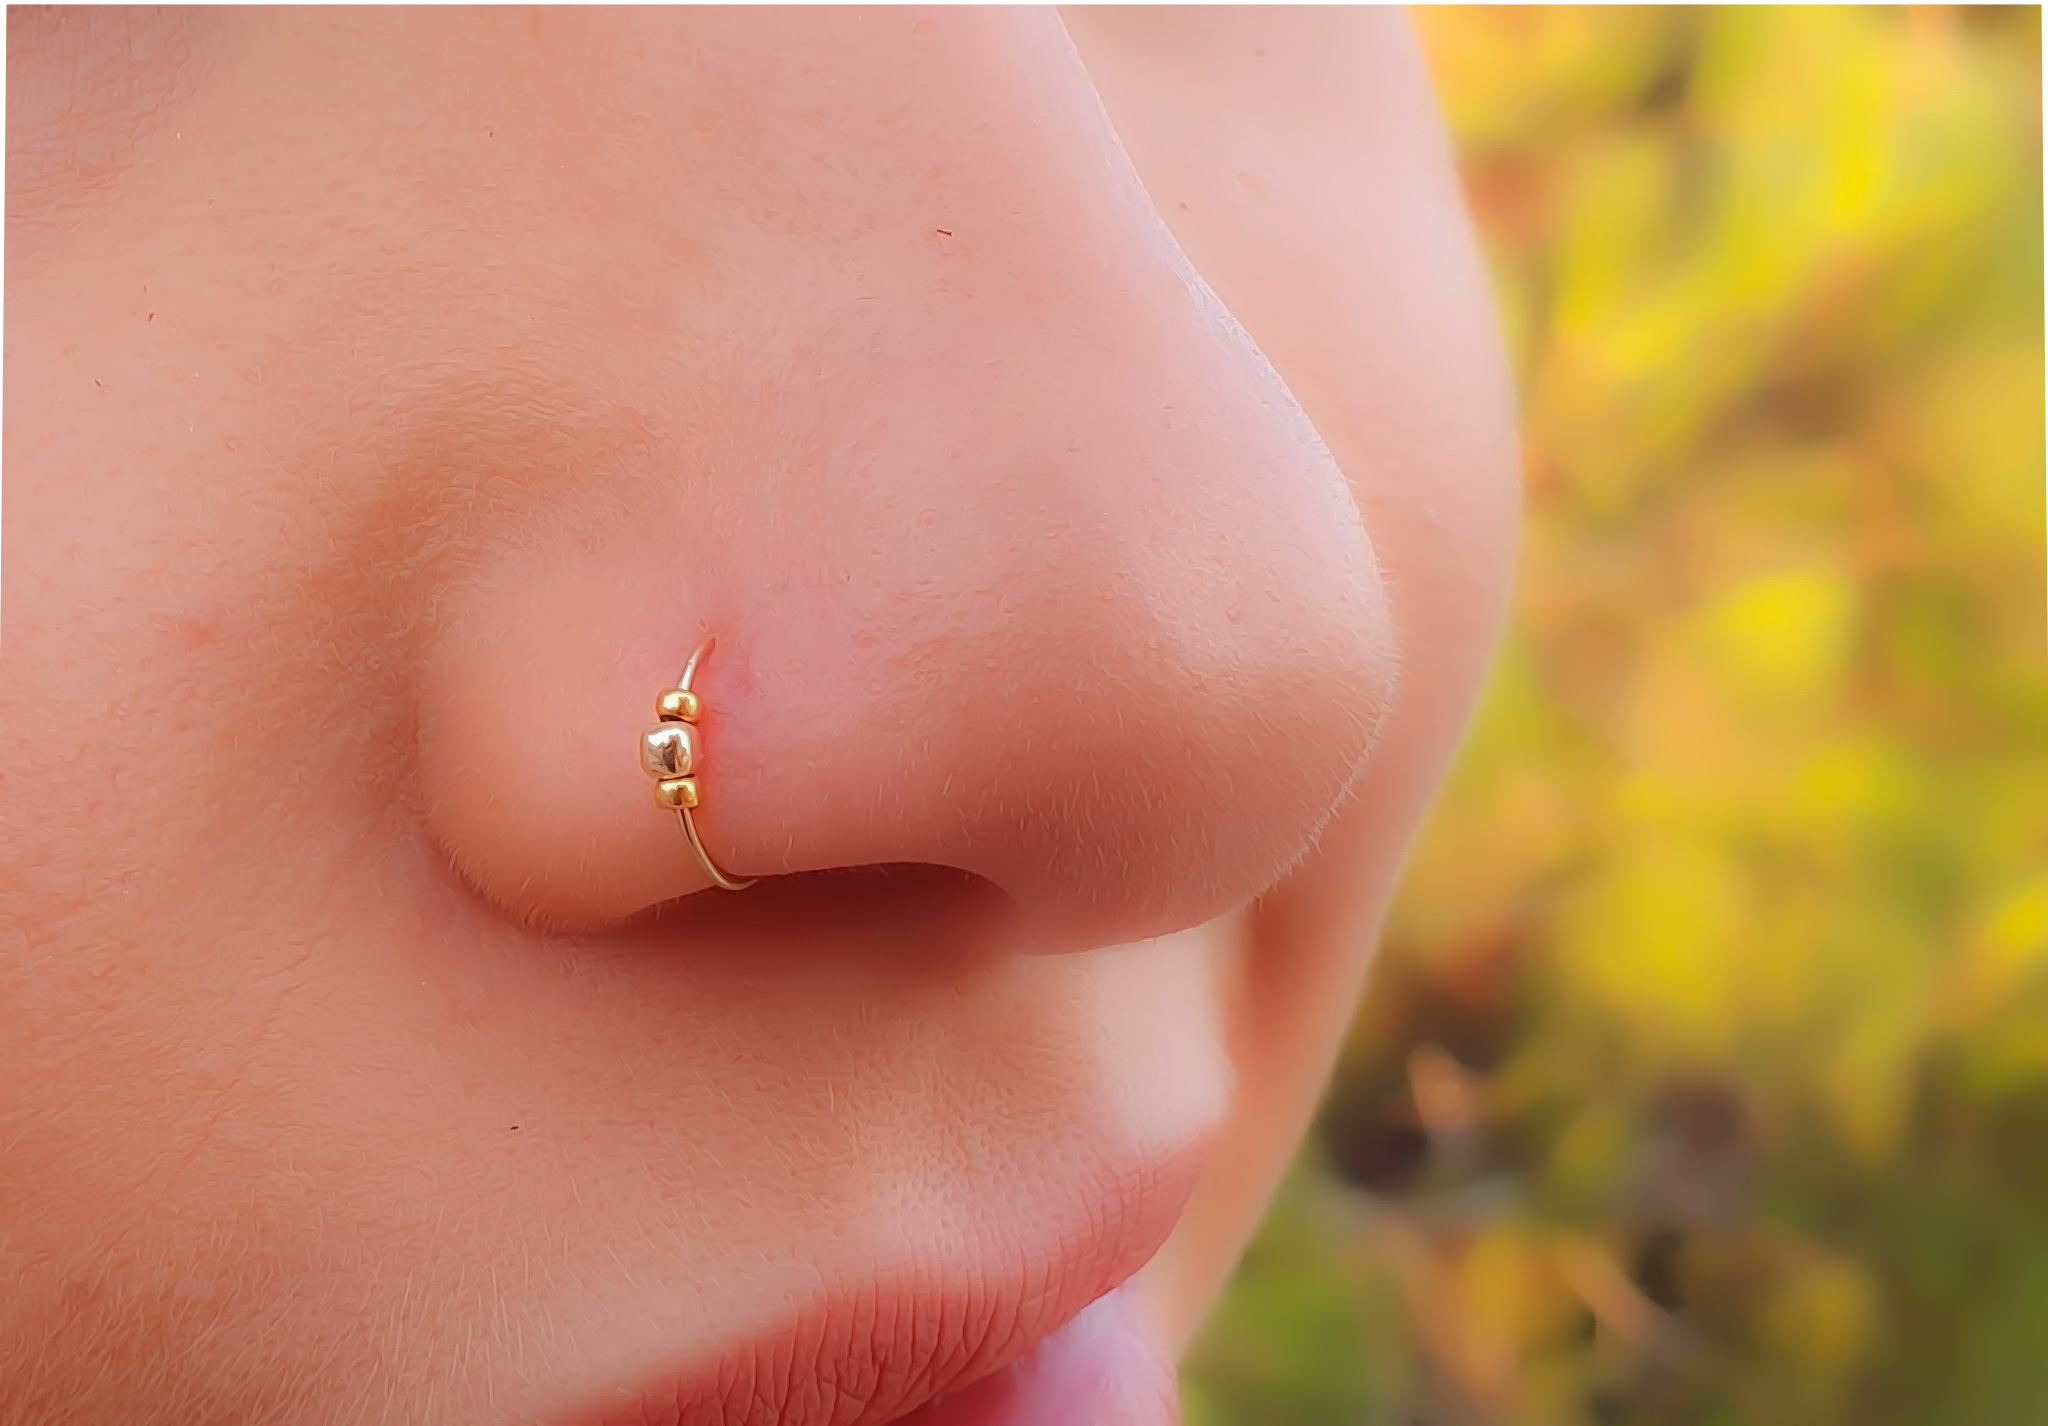 14k Gold Filled Adjustable Hoop Nose Ring 24 Gauge 5-6mm For Very Small Nose or LOW Piercing 